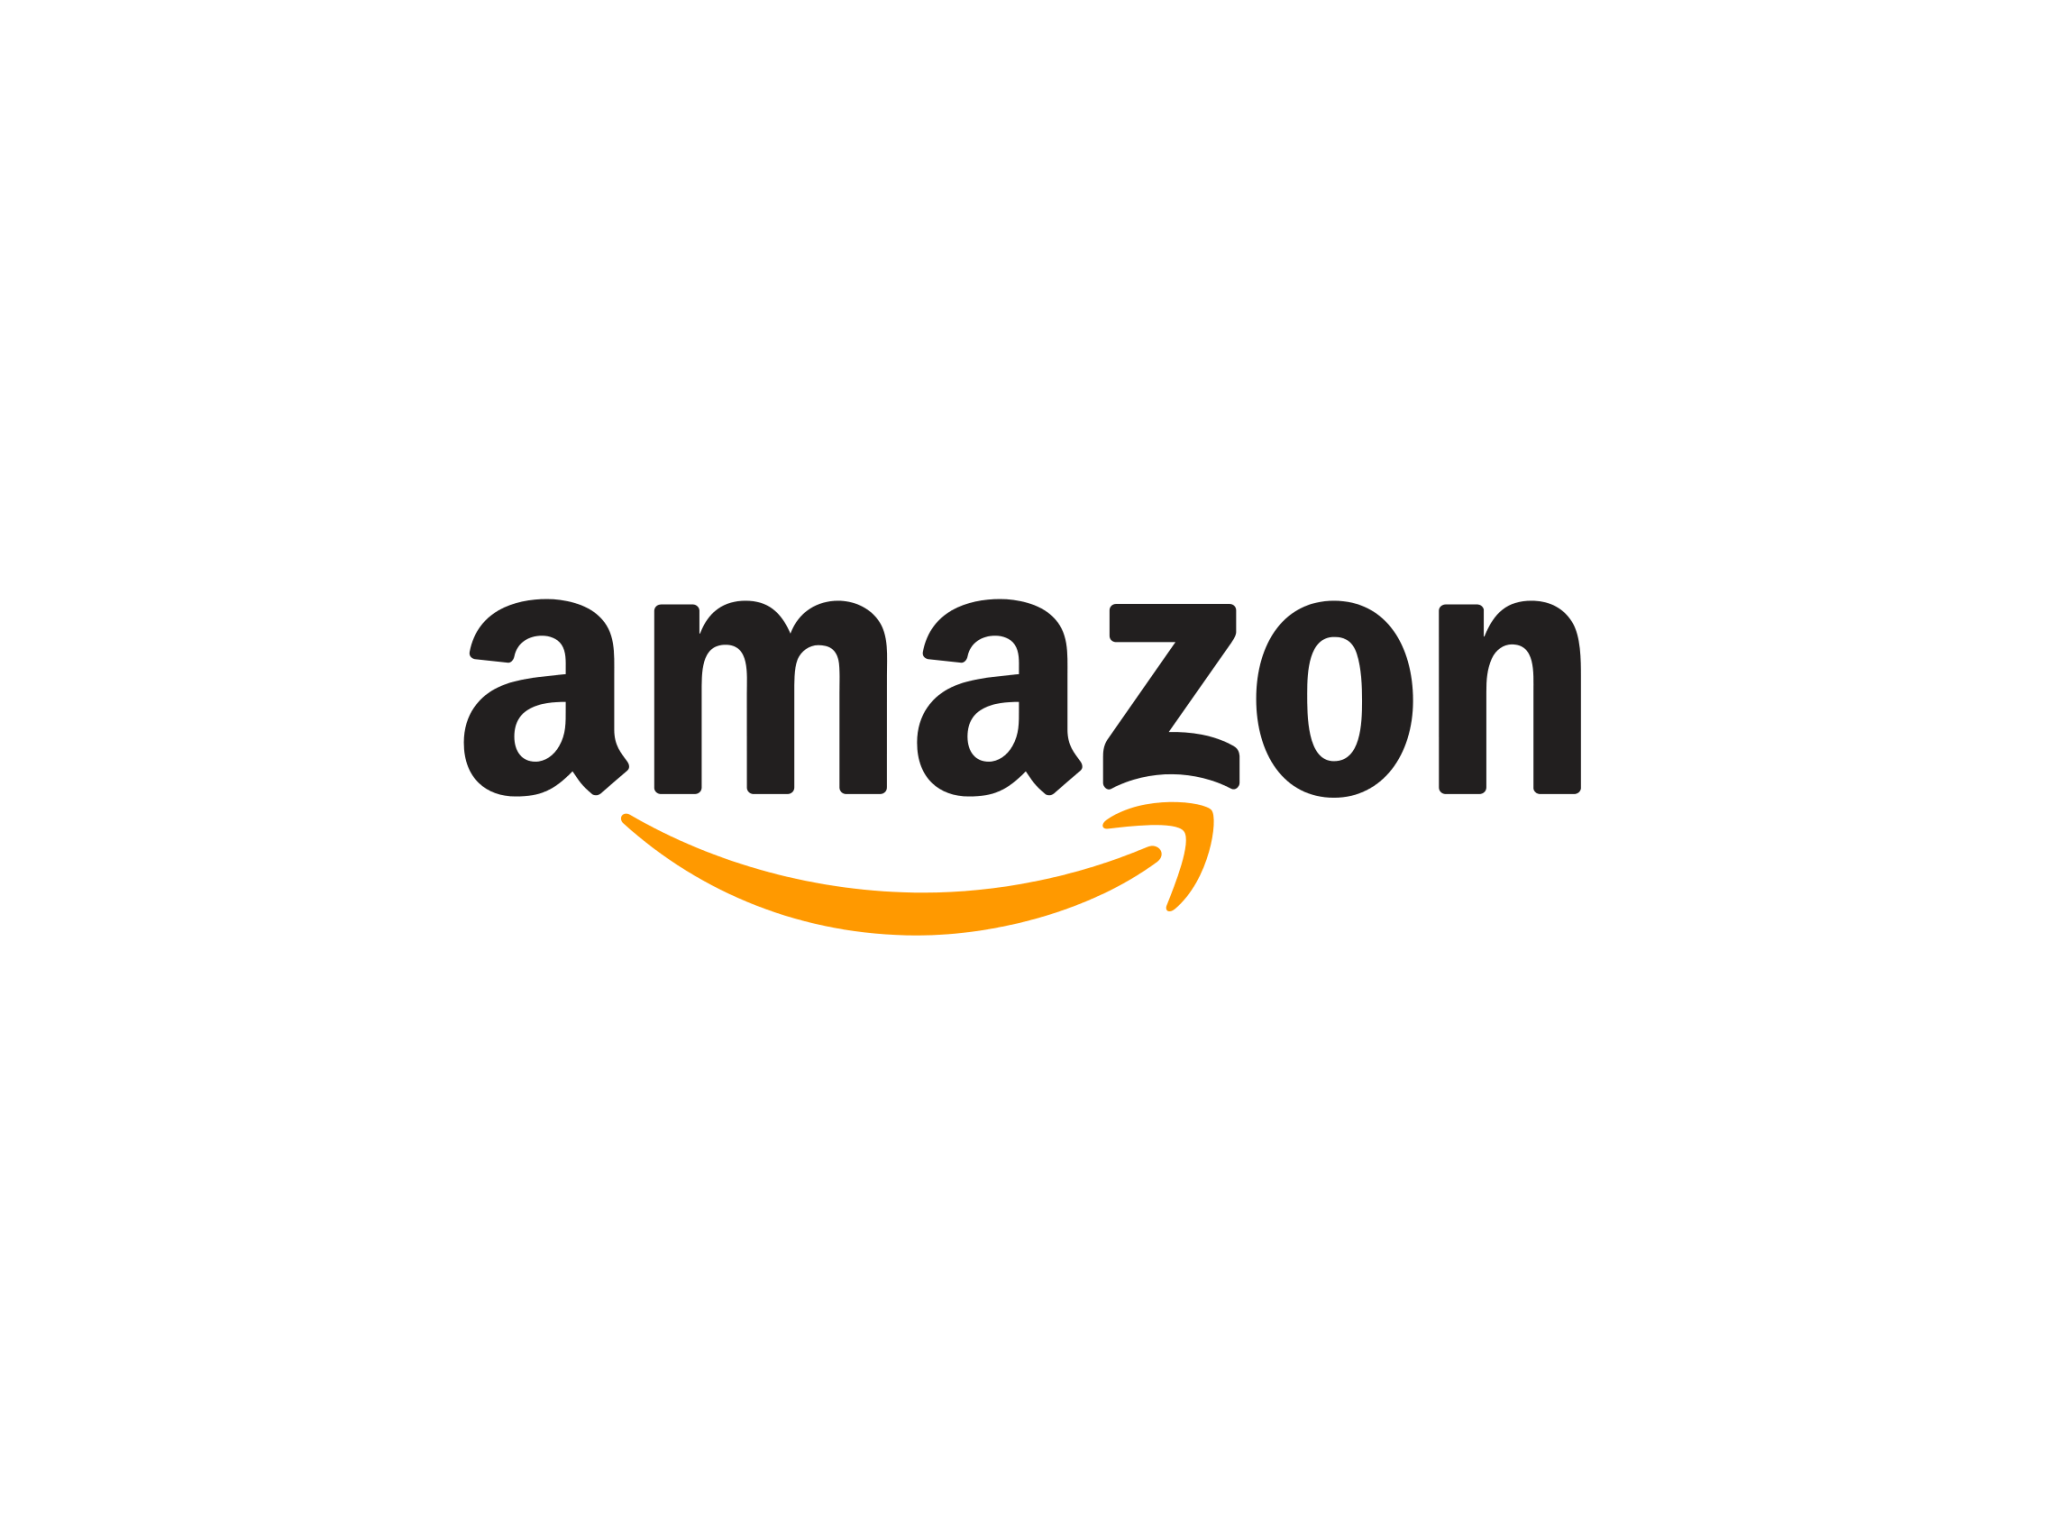 Anazon Logo - Amazon Logo PNG Image - PurePNG | Free transparent CC0 PNG Image Library